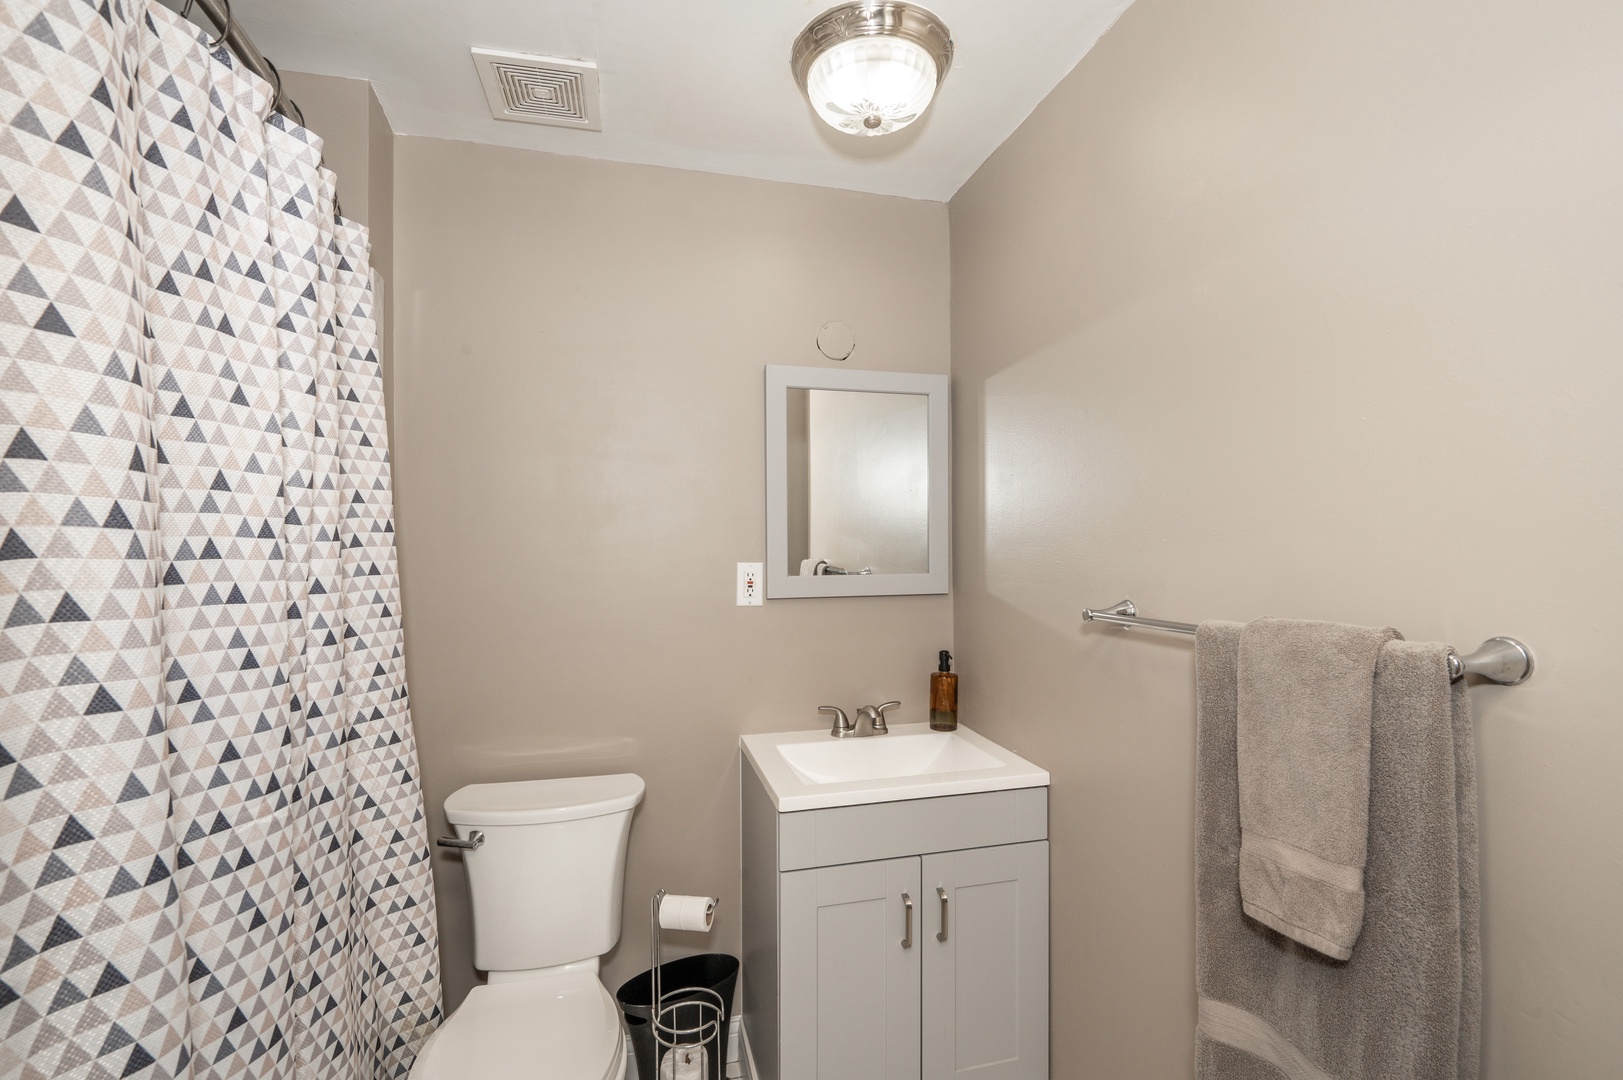 Monmouth Loft 4’s full bathroom offers a single vanity & walk-in shower